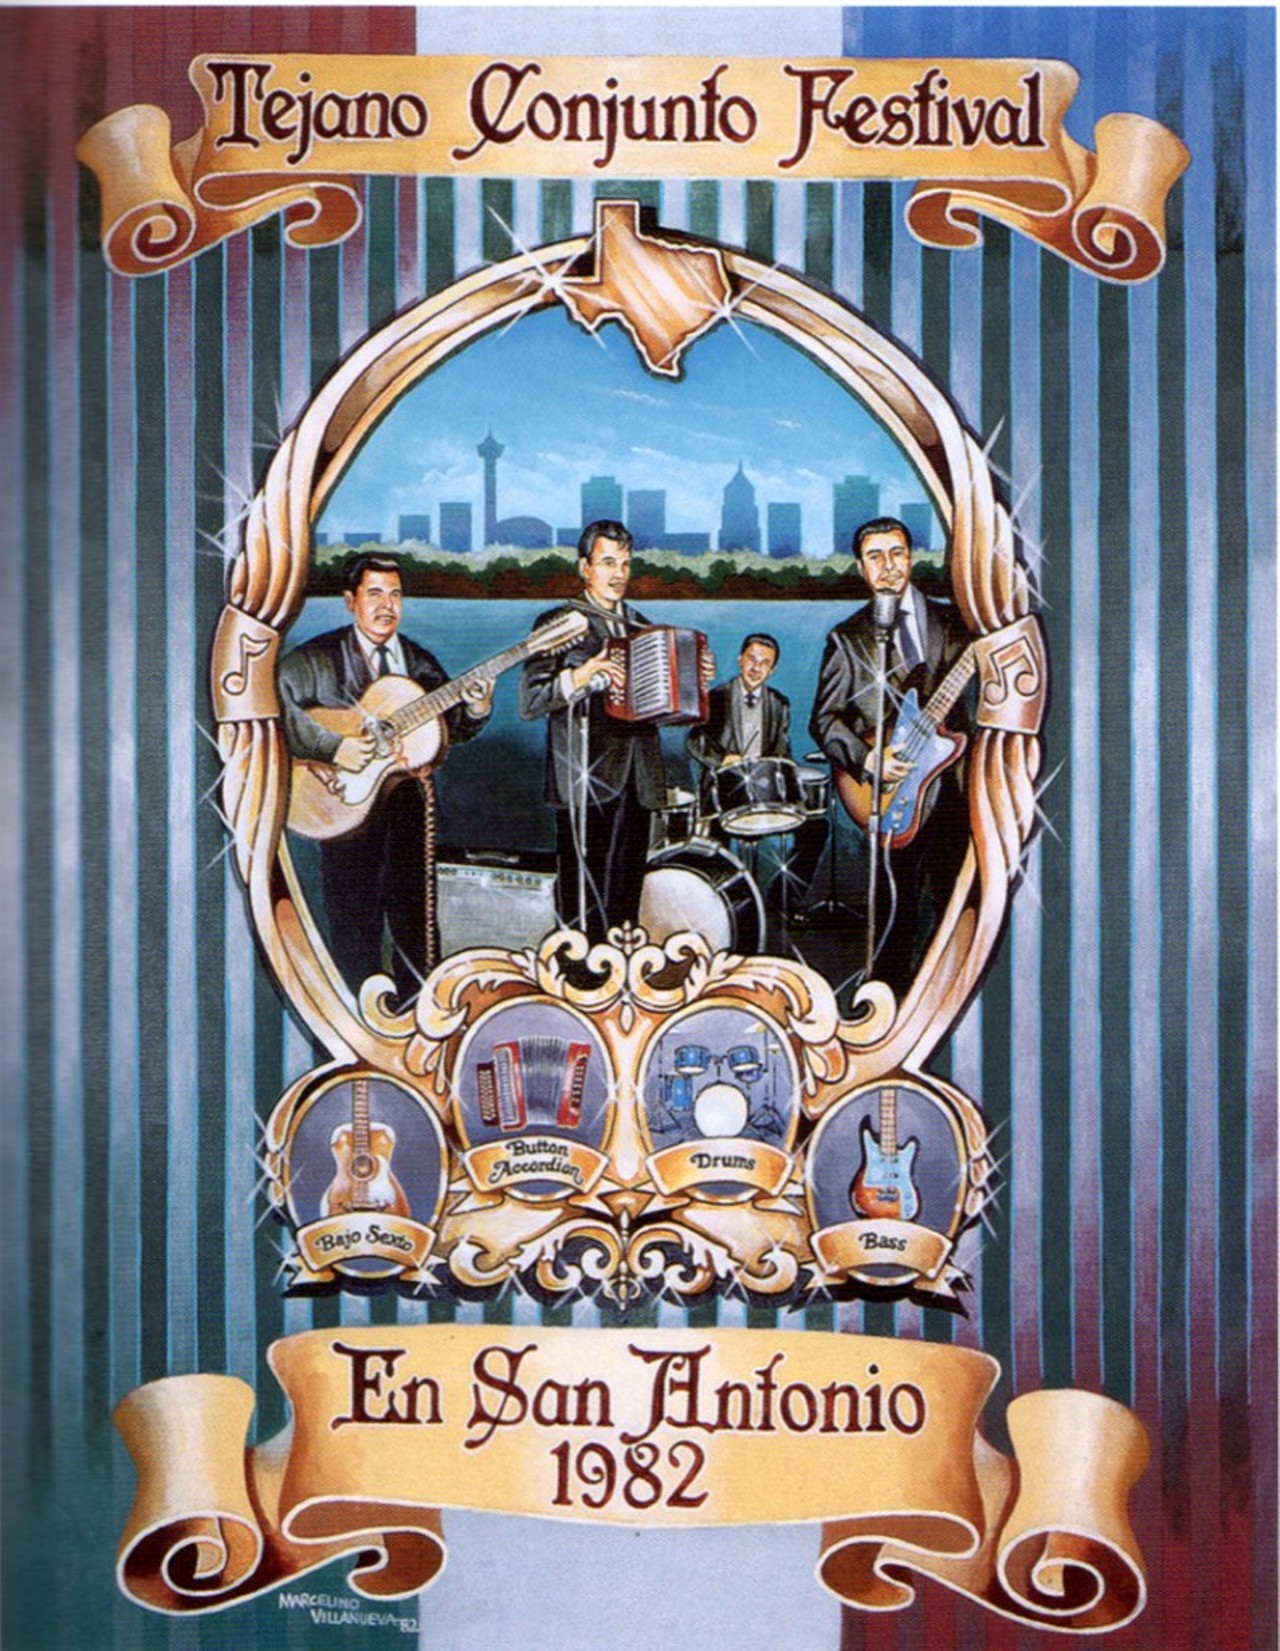 1982 Tejano Conjunto Festival poster by Marcelino F. Villanueva, Jr.